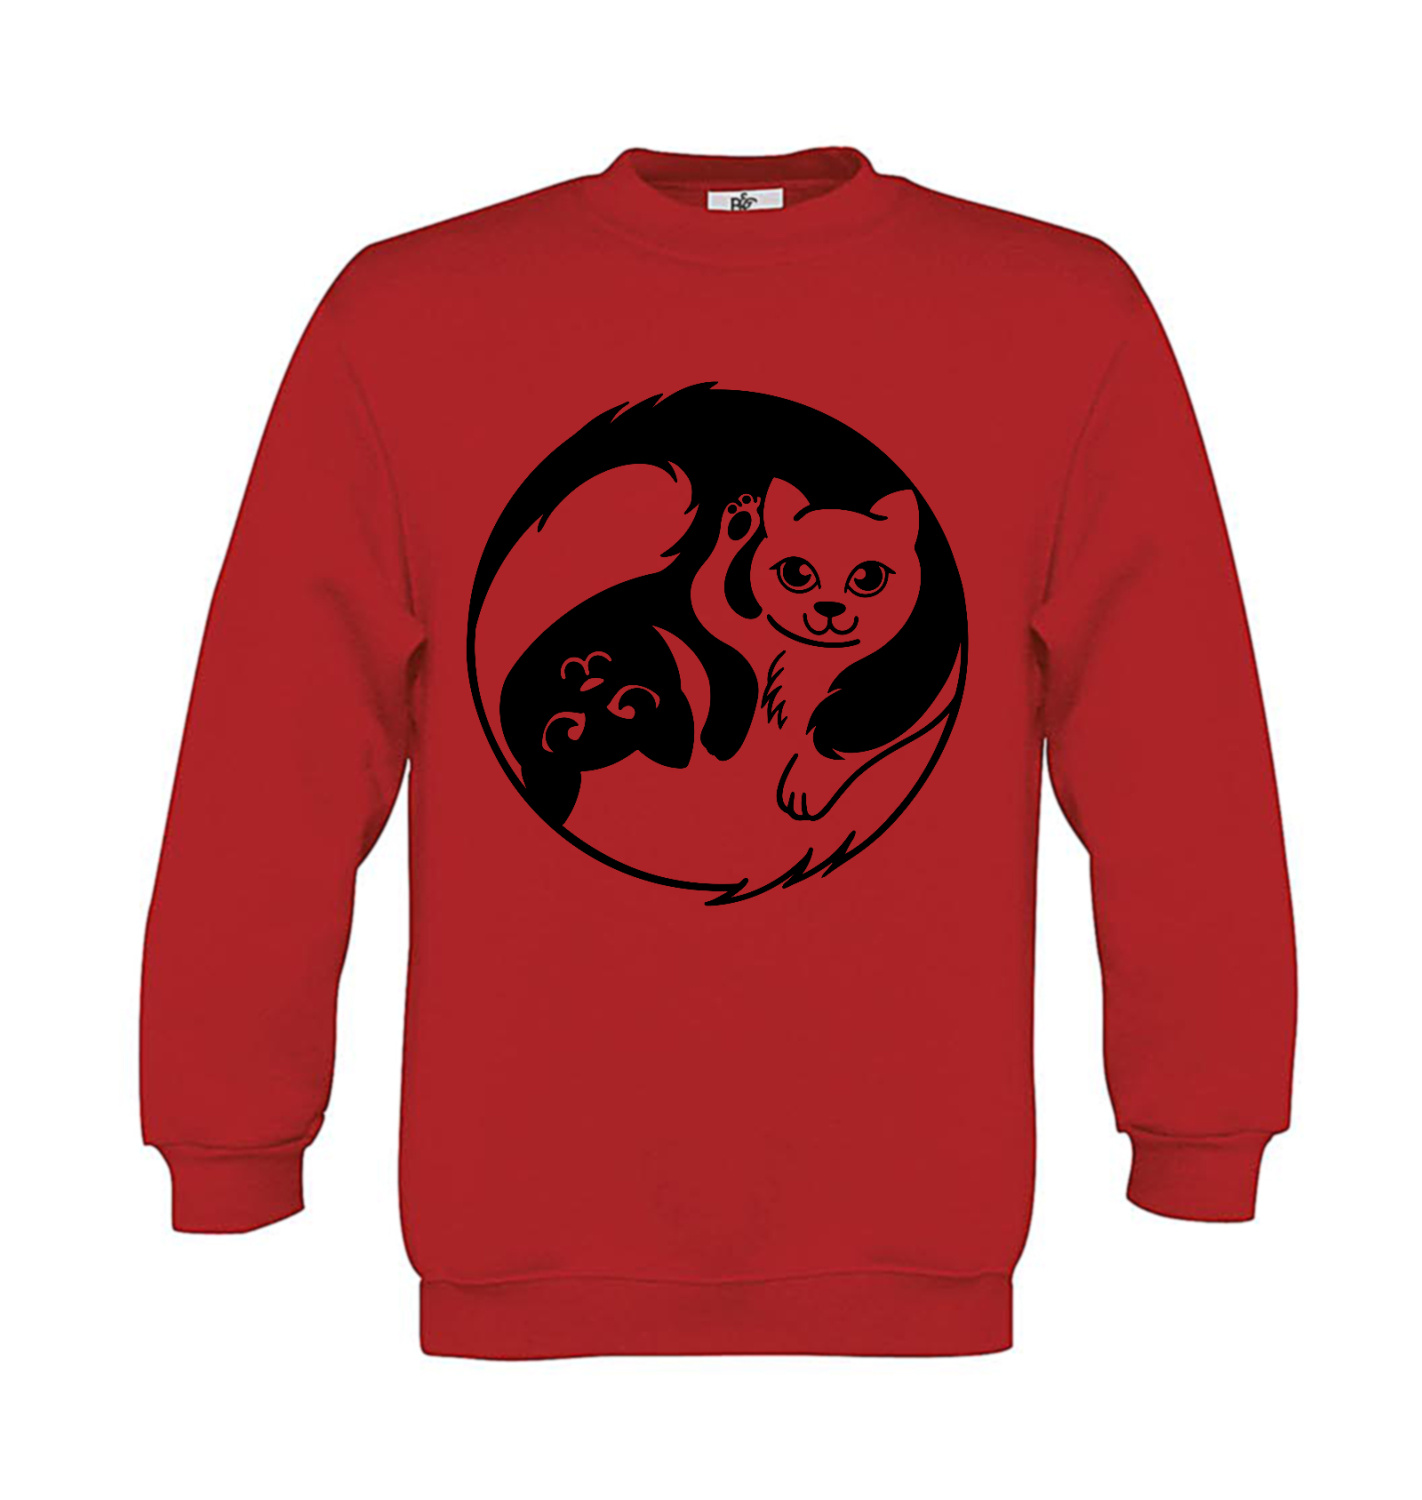 Sweatshirt Kinder Yin Yang Katze